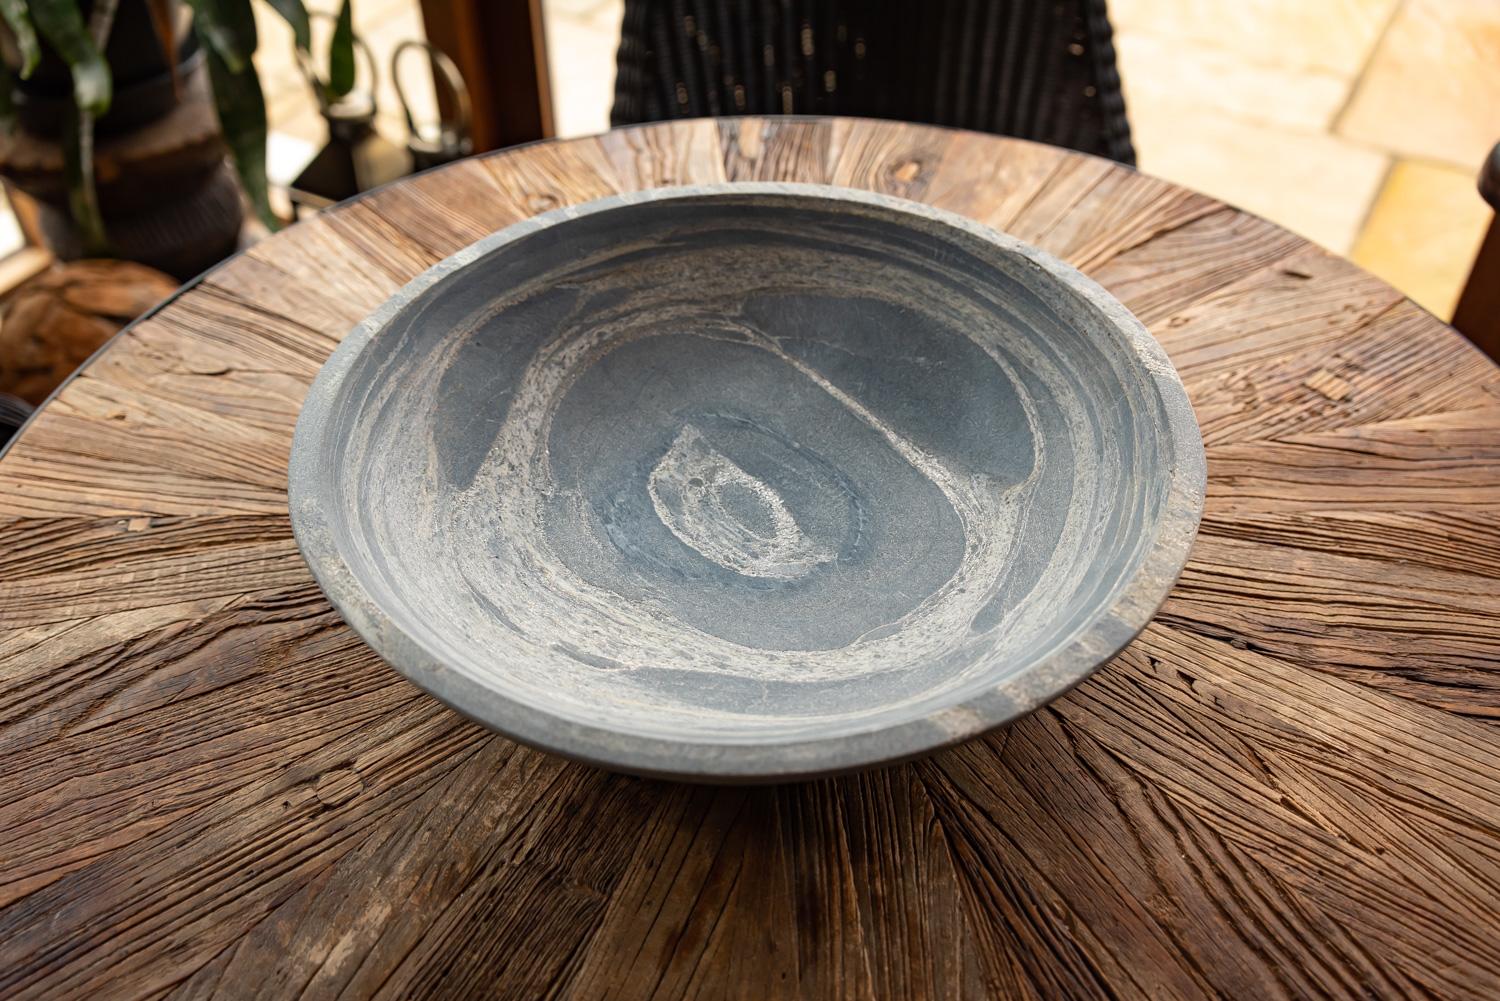 pewter sandstone bird bowl on oak table